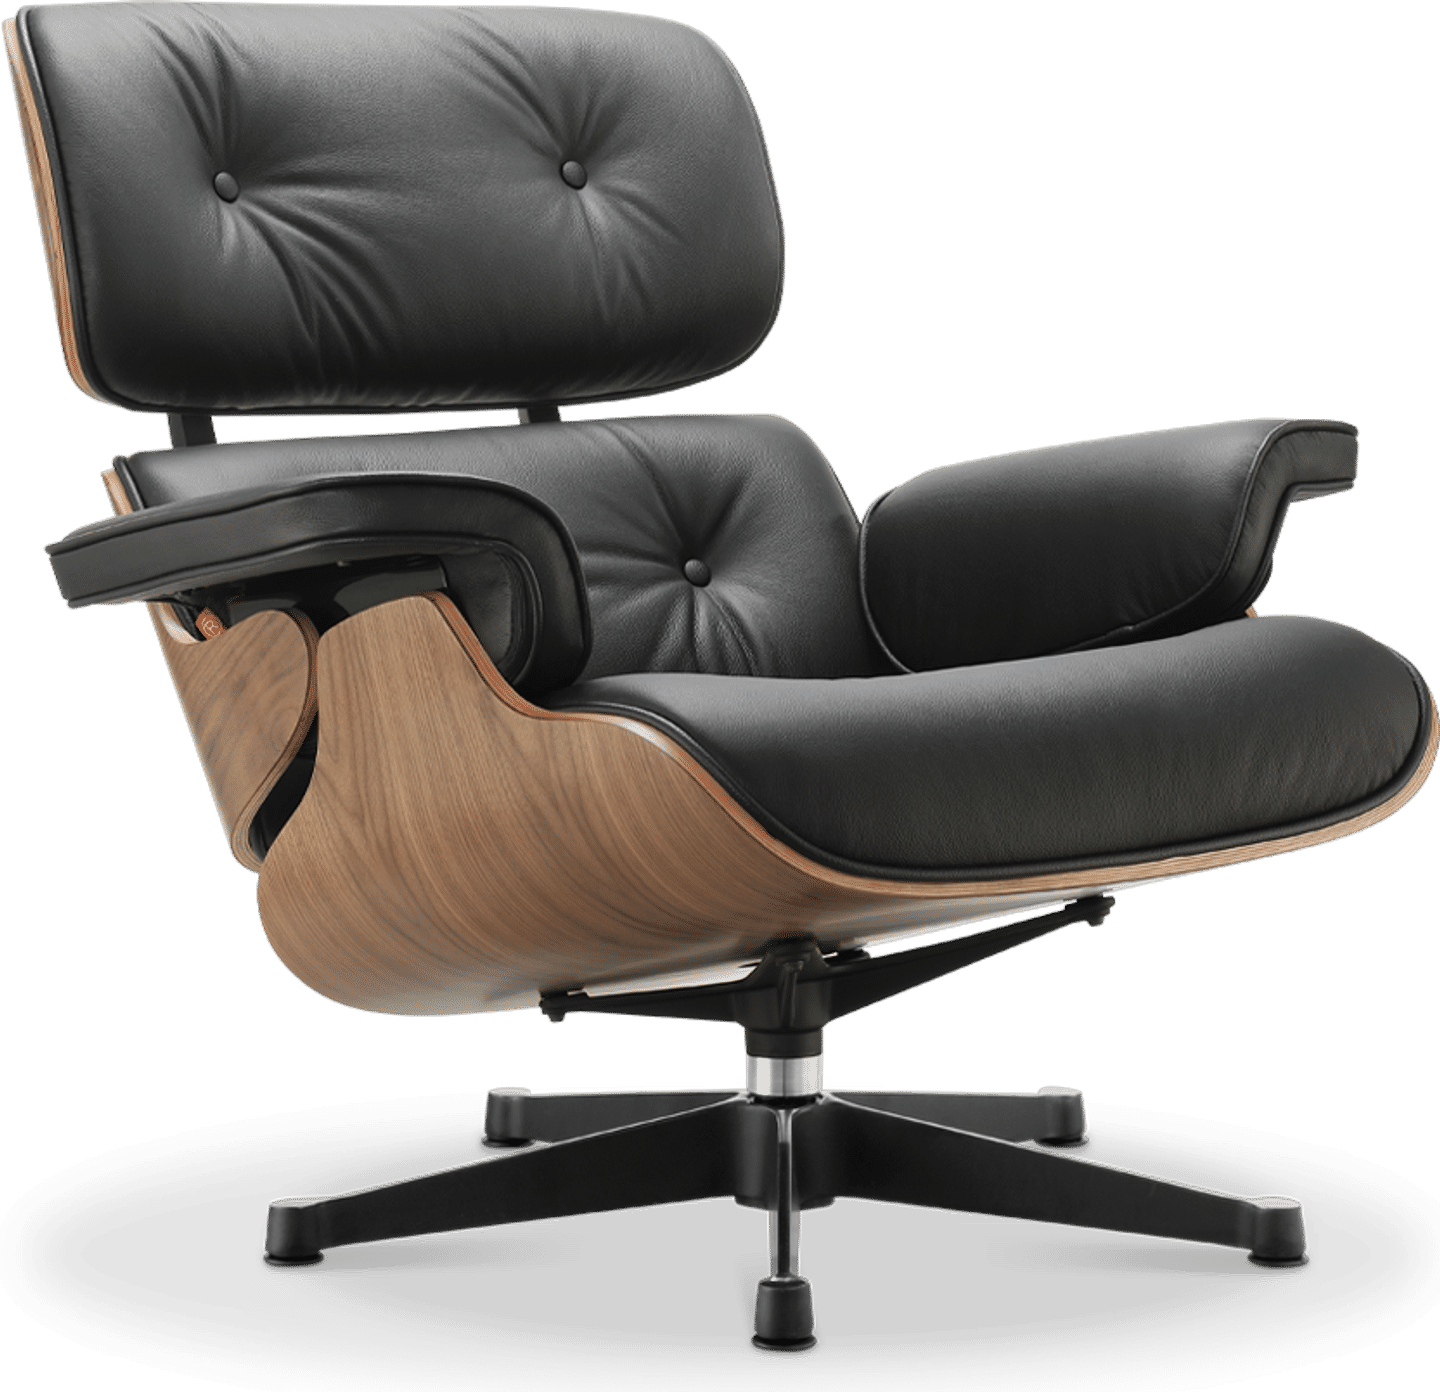 Eames Style Lounge Chair 670 Italian Leather/Black/Walnut Veneer image.